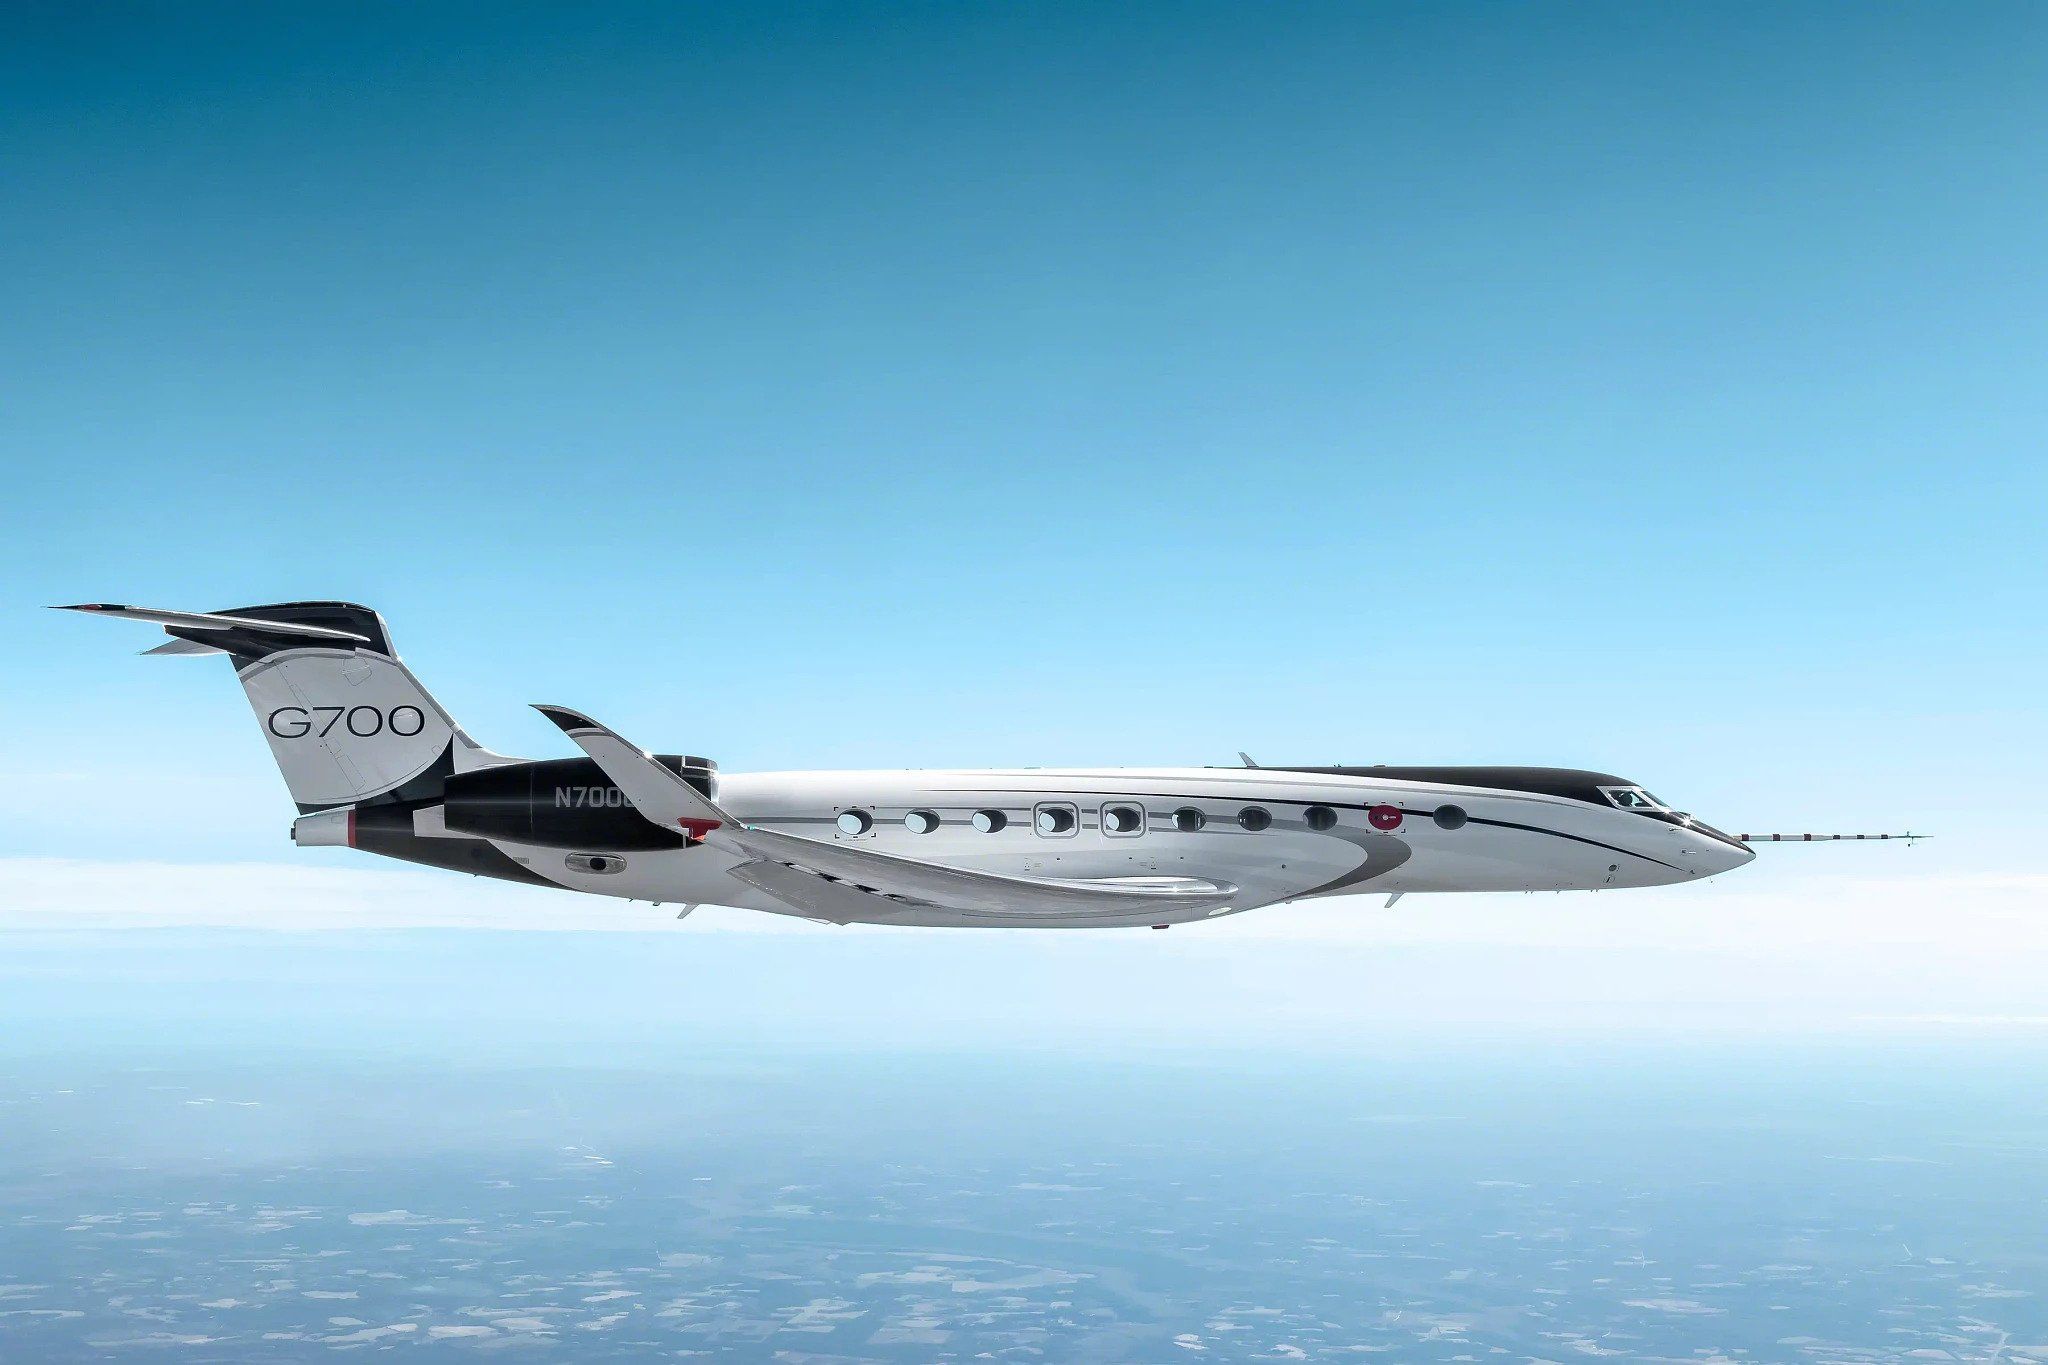 A Gulfstream G700 flying in the sky.